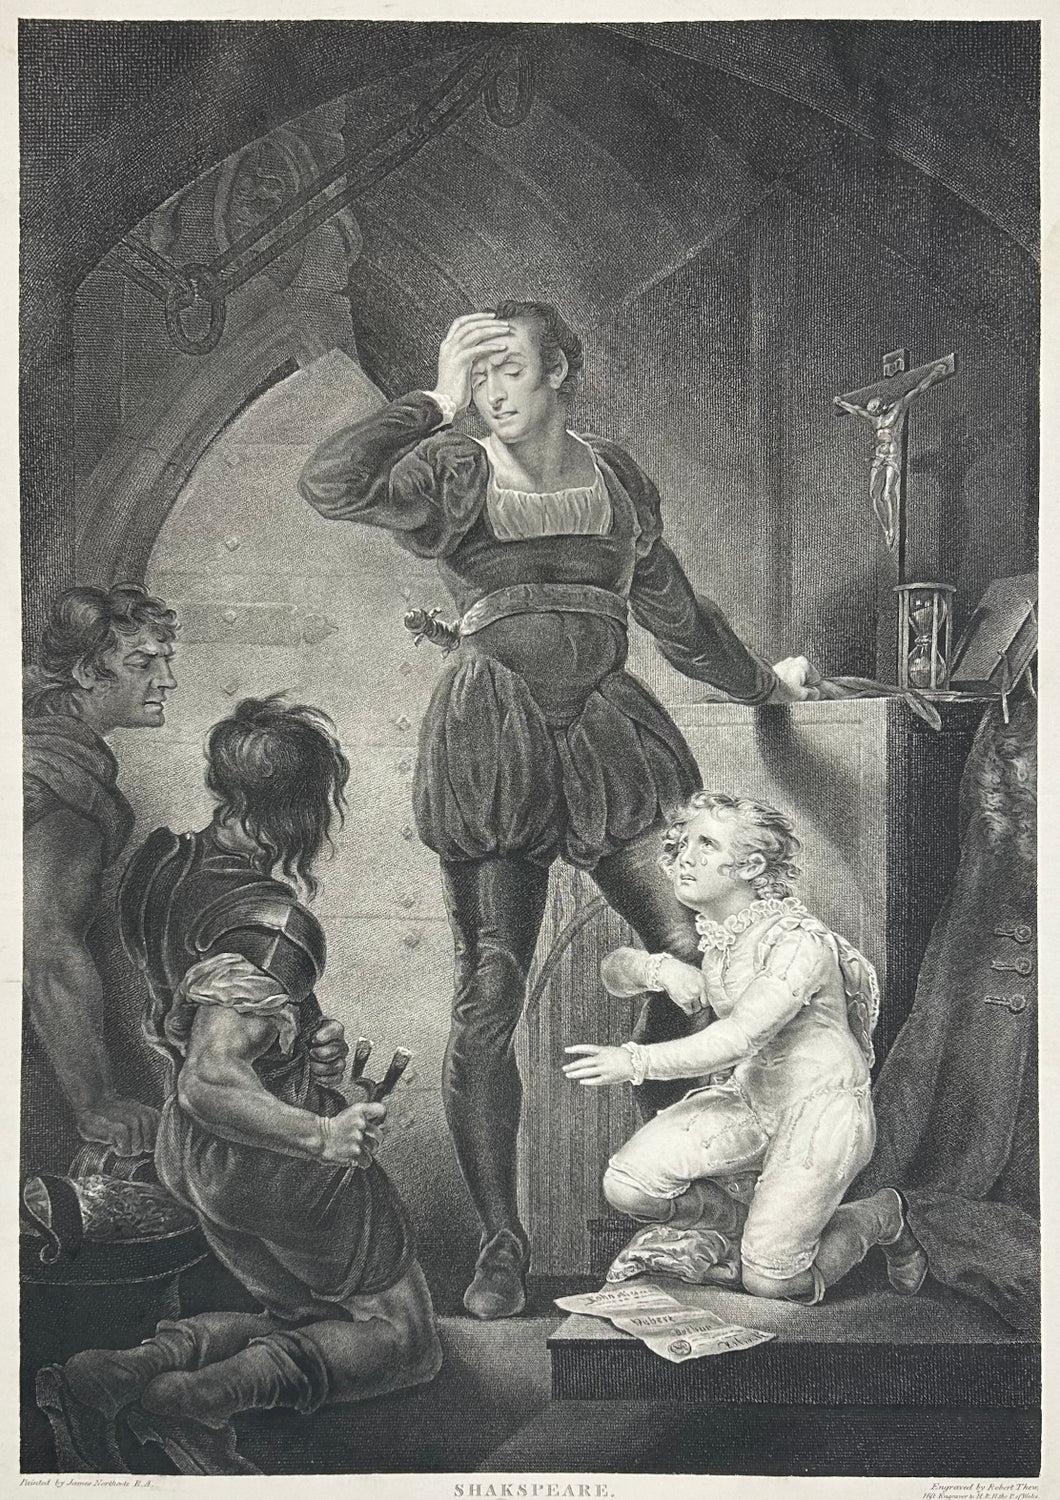 Northcote, James Plate 55. “King John, Act IV, Scene i. Prison. Arthur, Hubert and attendants